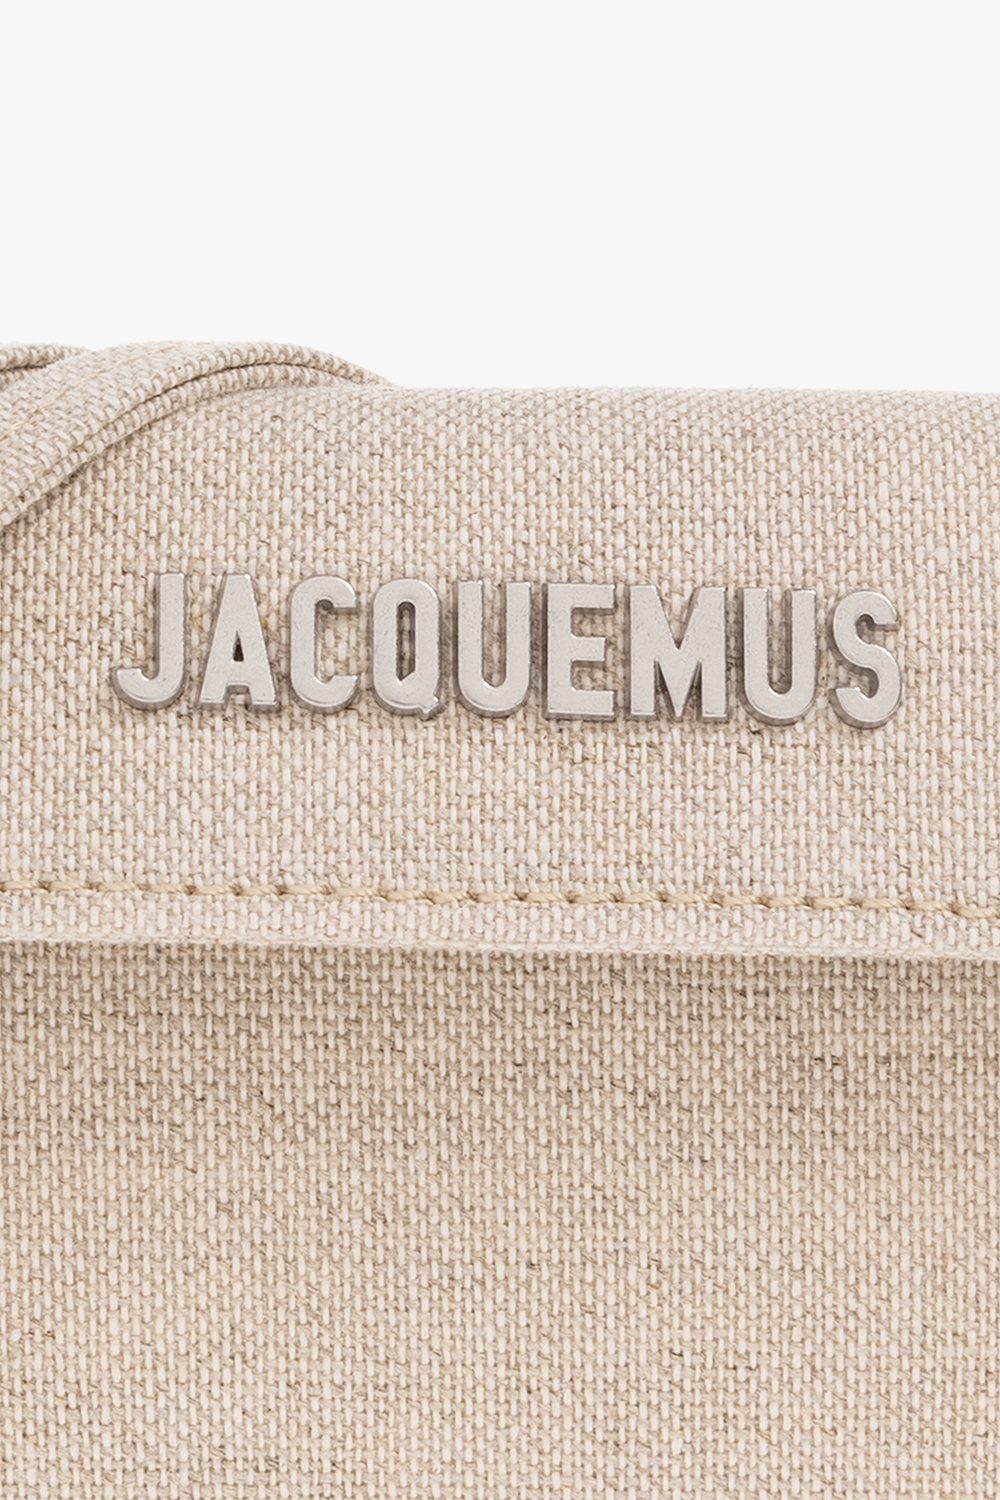 Jacquemus BECOME A LUXURY SANTA CLAUS